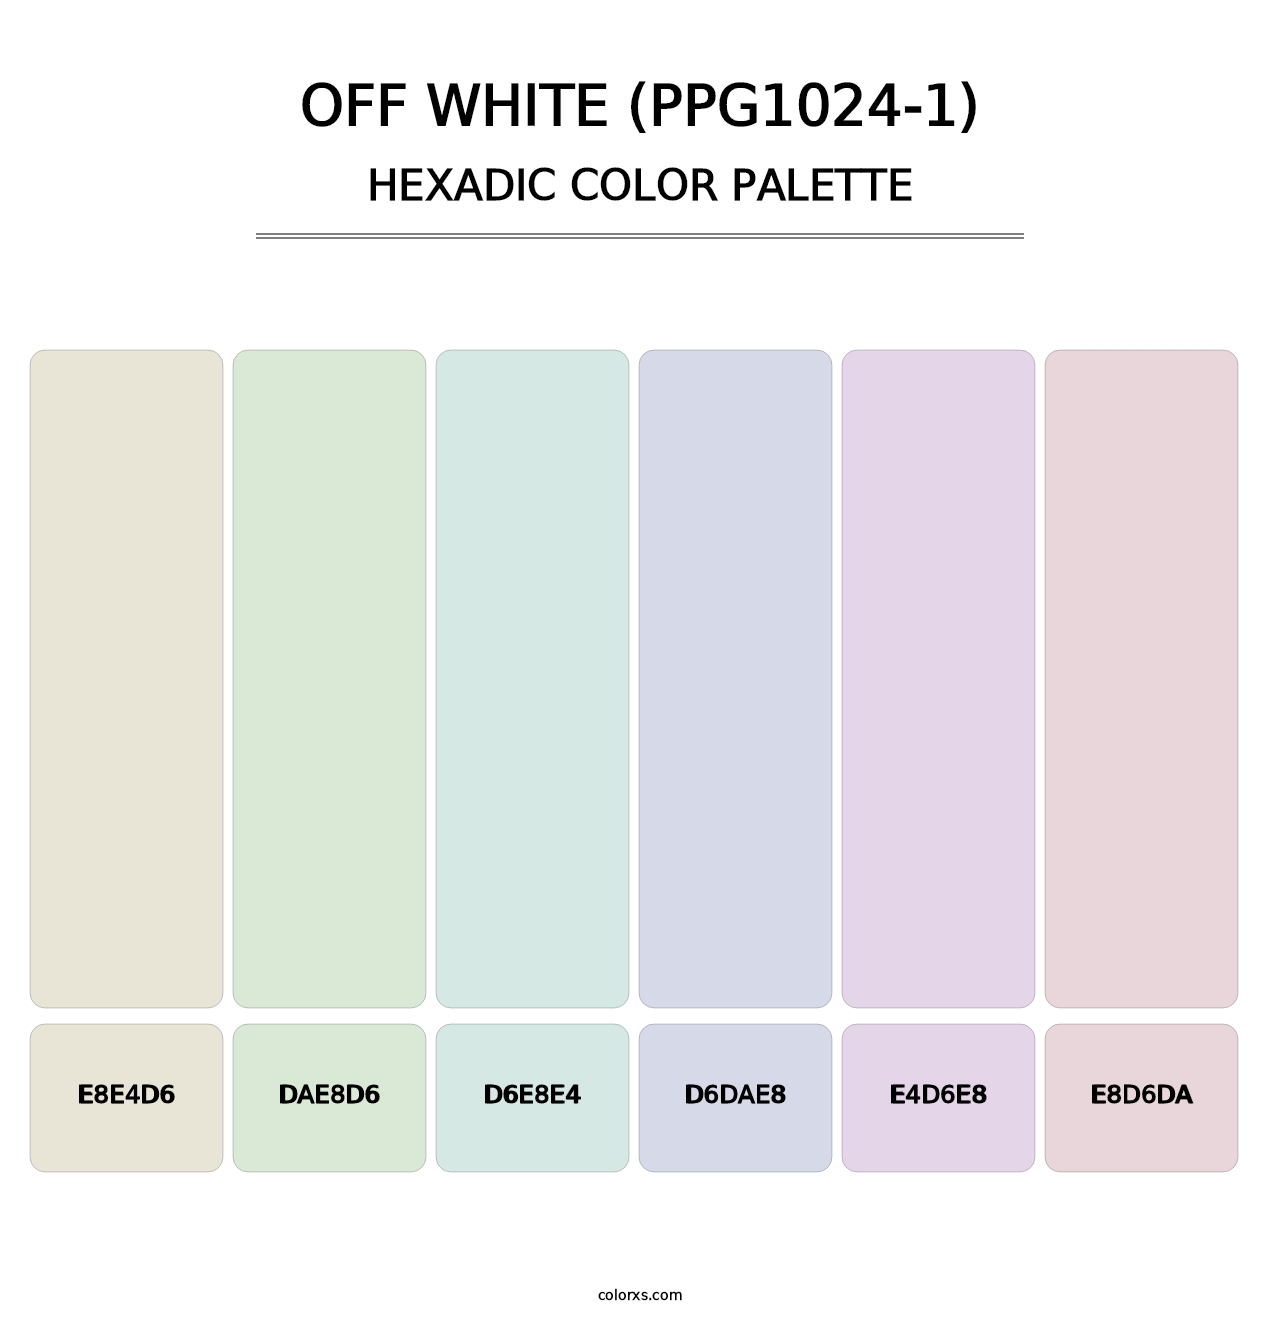 Off White (PPG1024-1) - Hexadic Color Palette